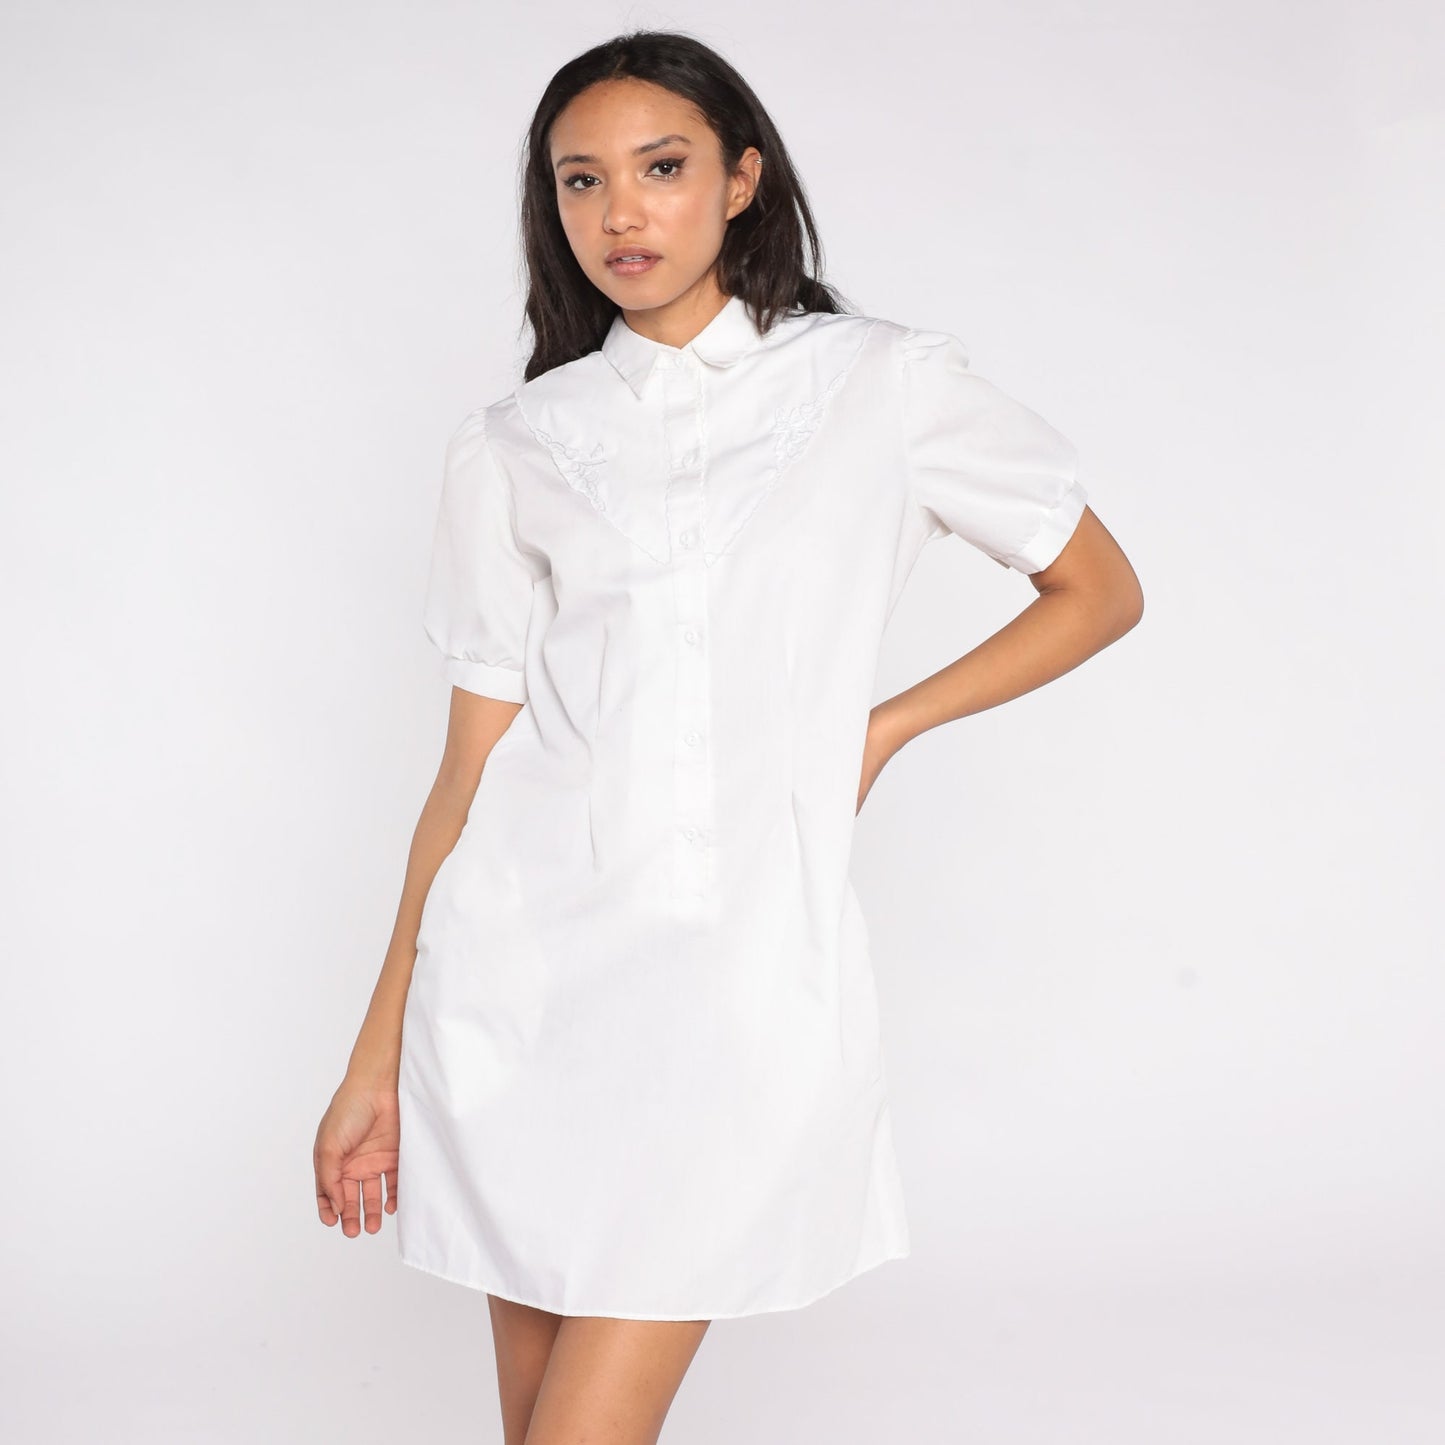 White Sheath Dress 80s Puff Sleeve Mini Collared Button Up Shift Floral Embroidered Minidress Nurse Uniform Retro Vintage 1980s Medium M